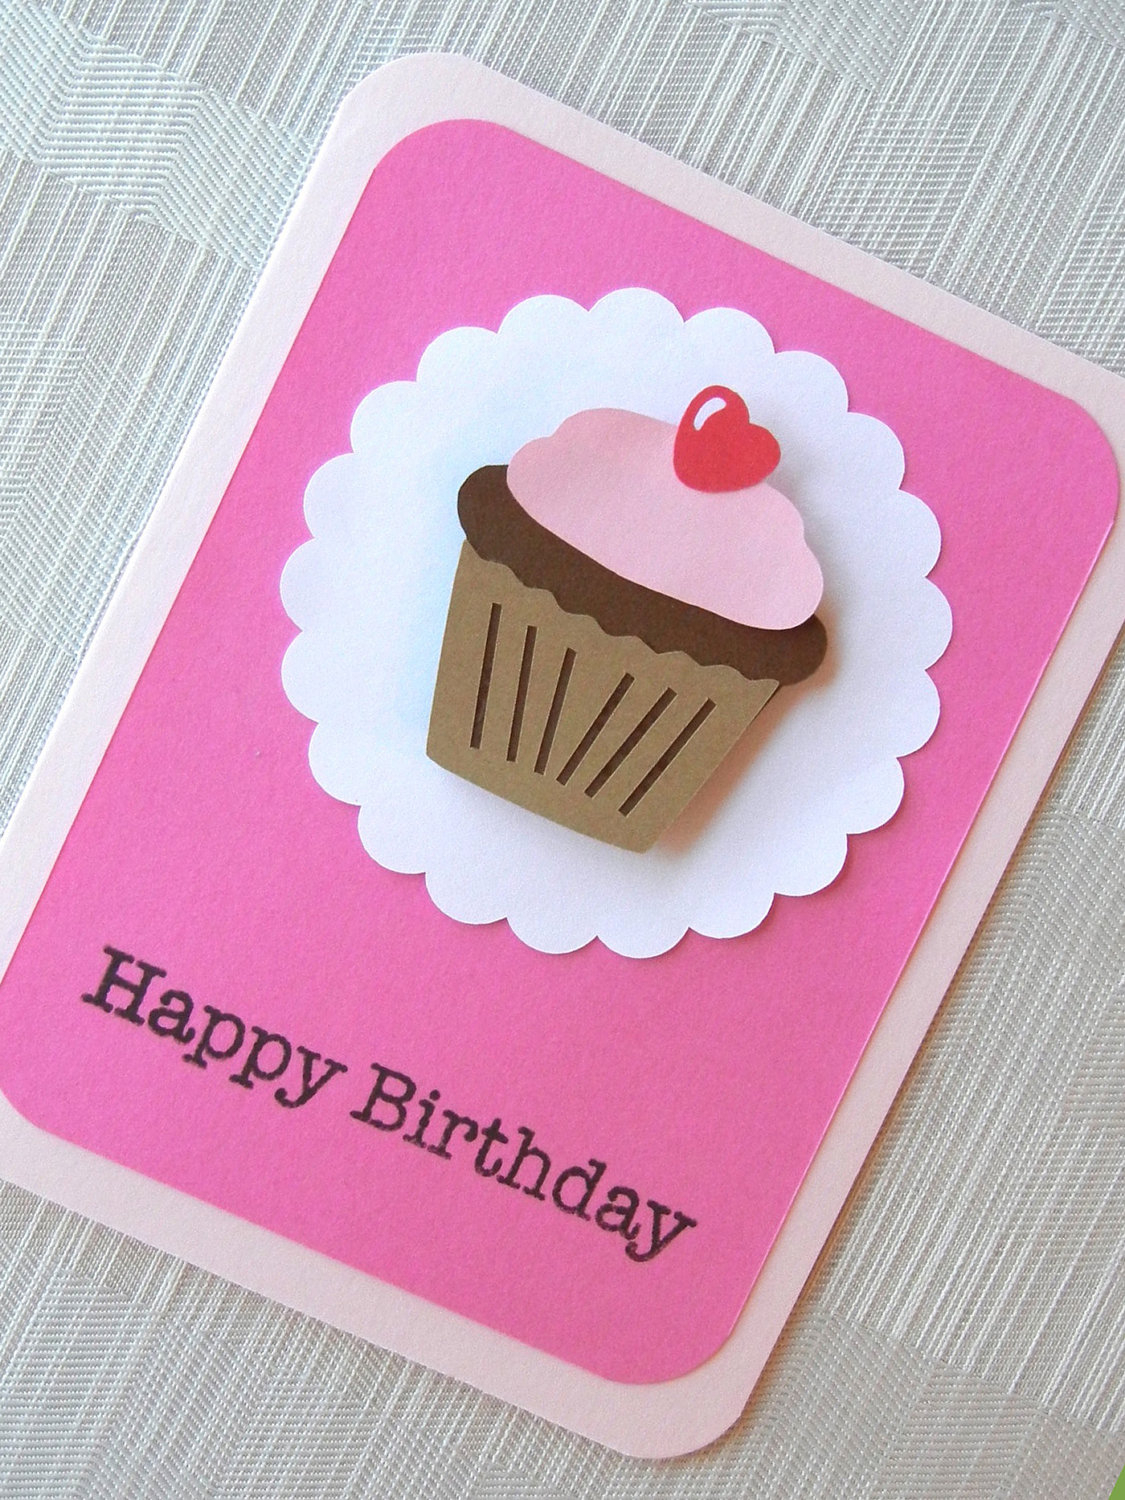 Cute Ideas For Birthday Cards Easy Diy Birthday Cards Ideas And Designs